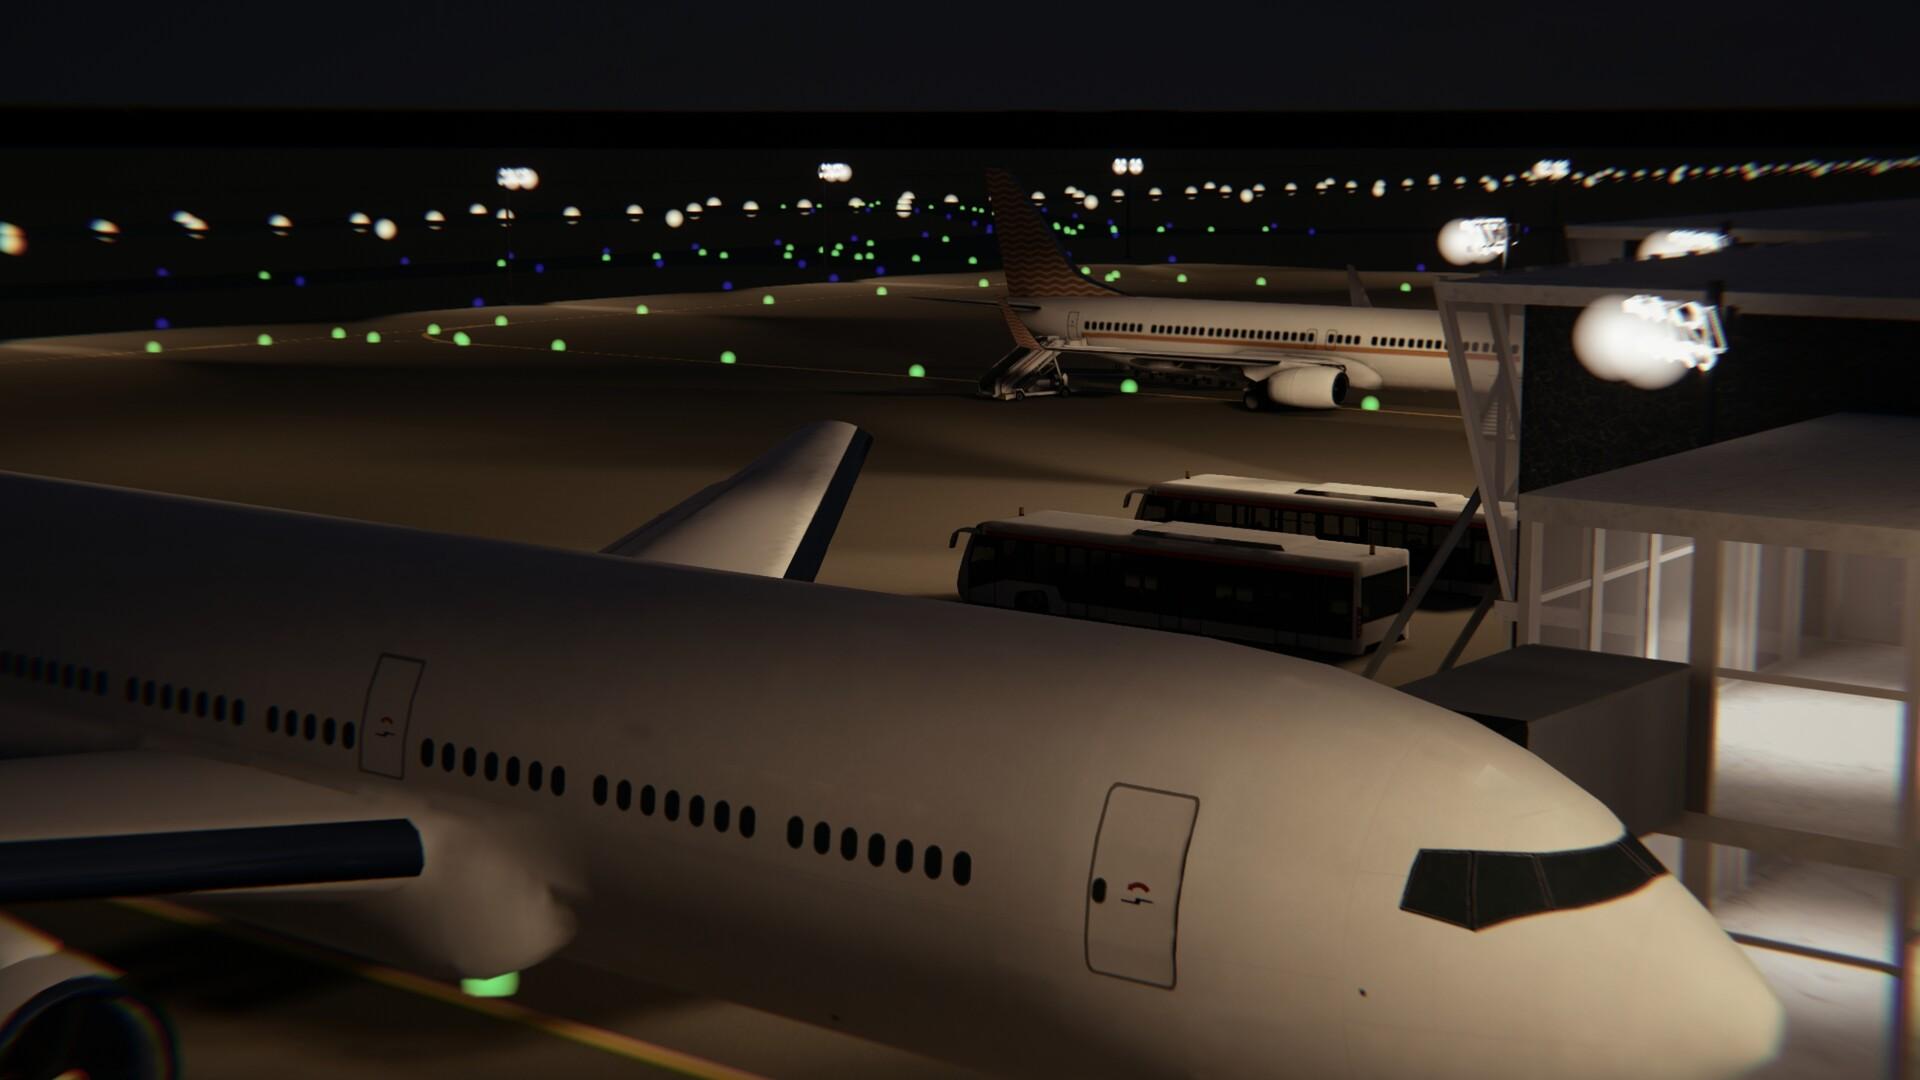 Screenshot №5 from game FPV SkyDive : FPV Drone Simulator